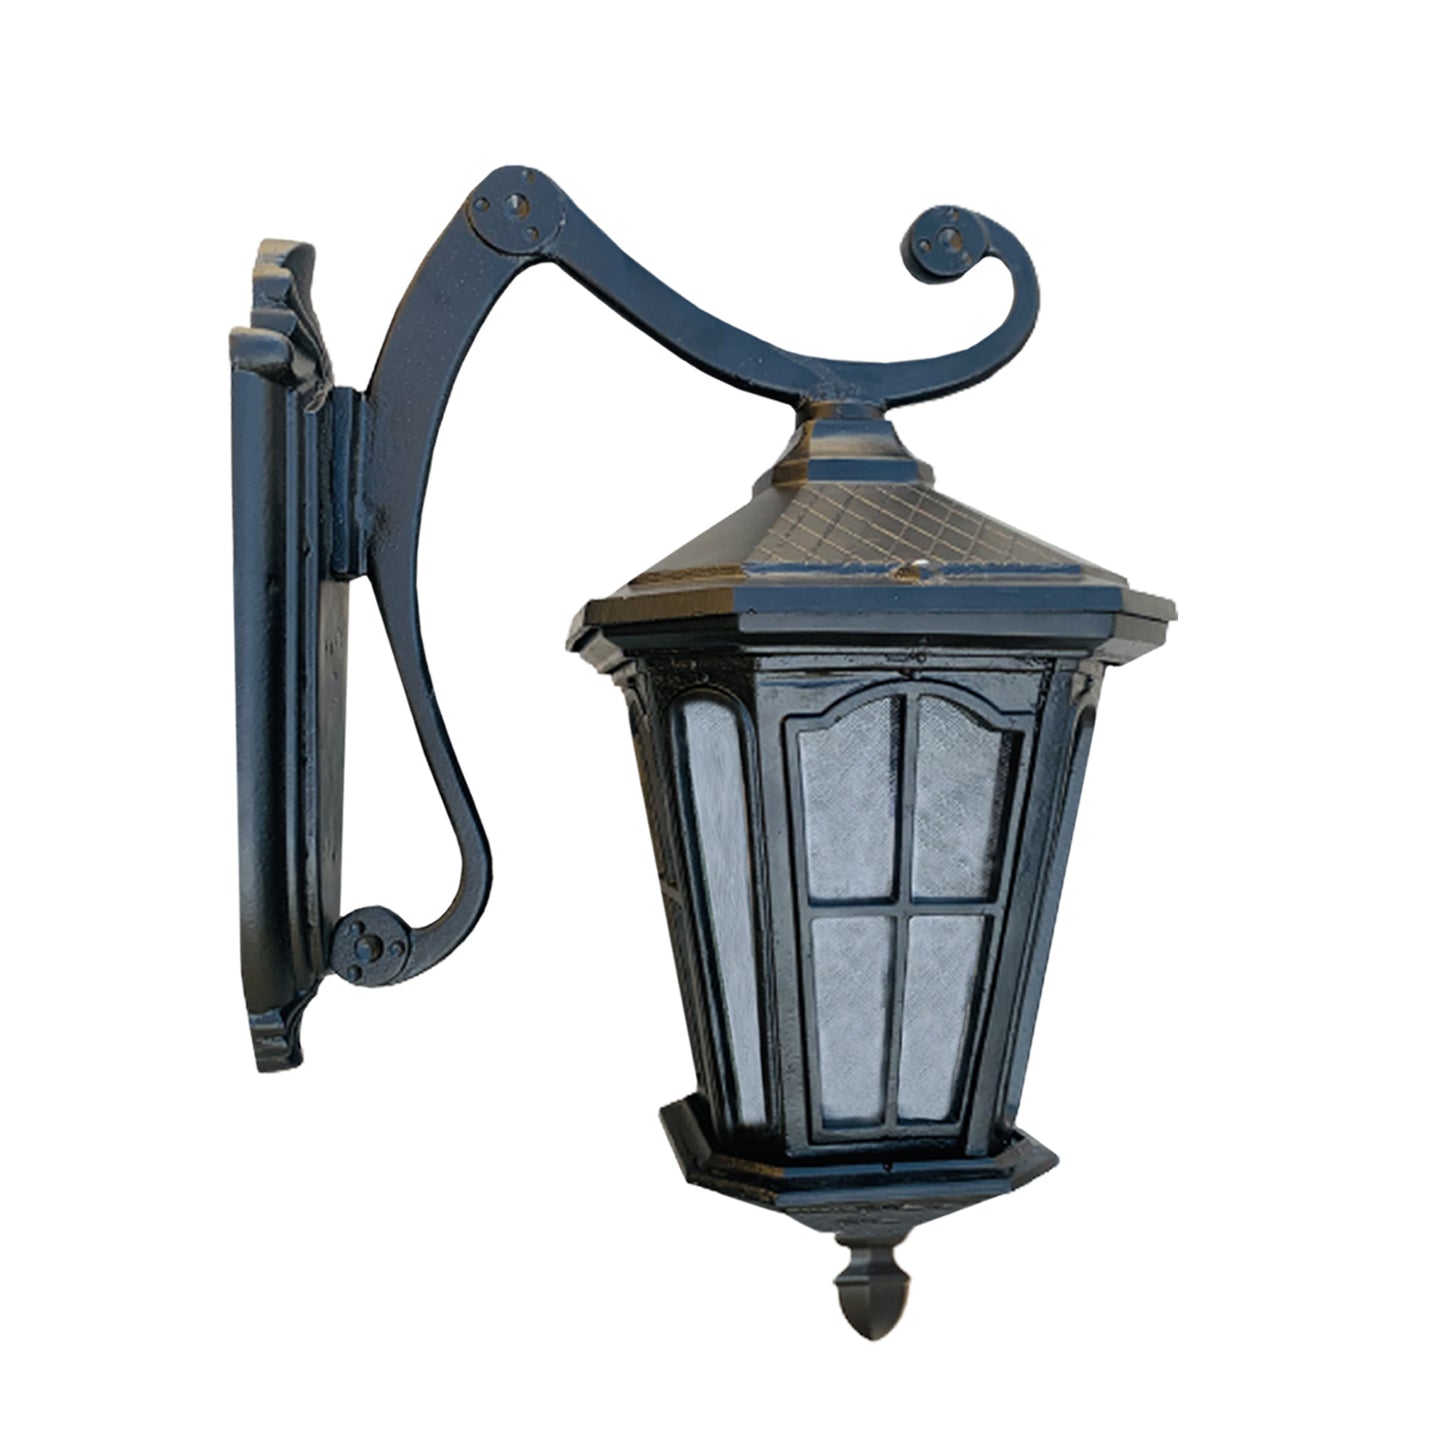 1 Piece Elegent Outdoor Porch Wall Light Wall Mount Exterior Lantern Light Lamp In Black Color